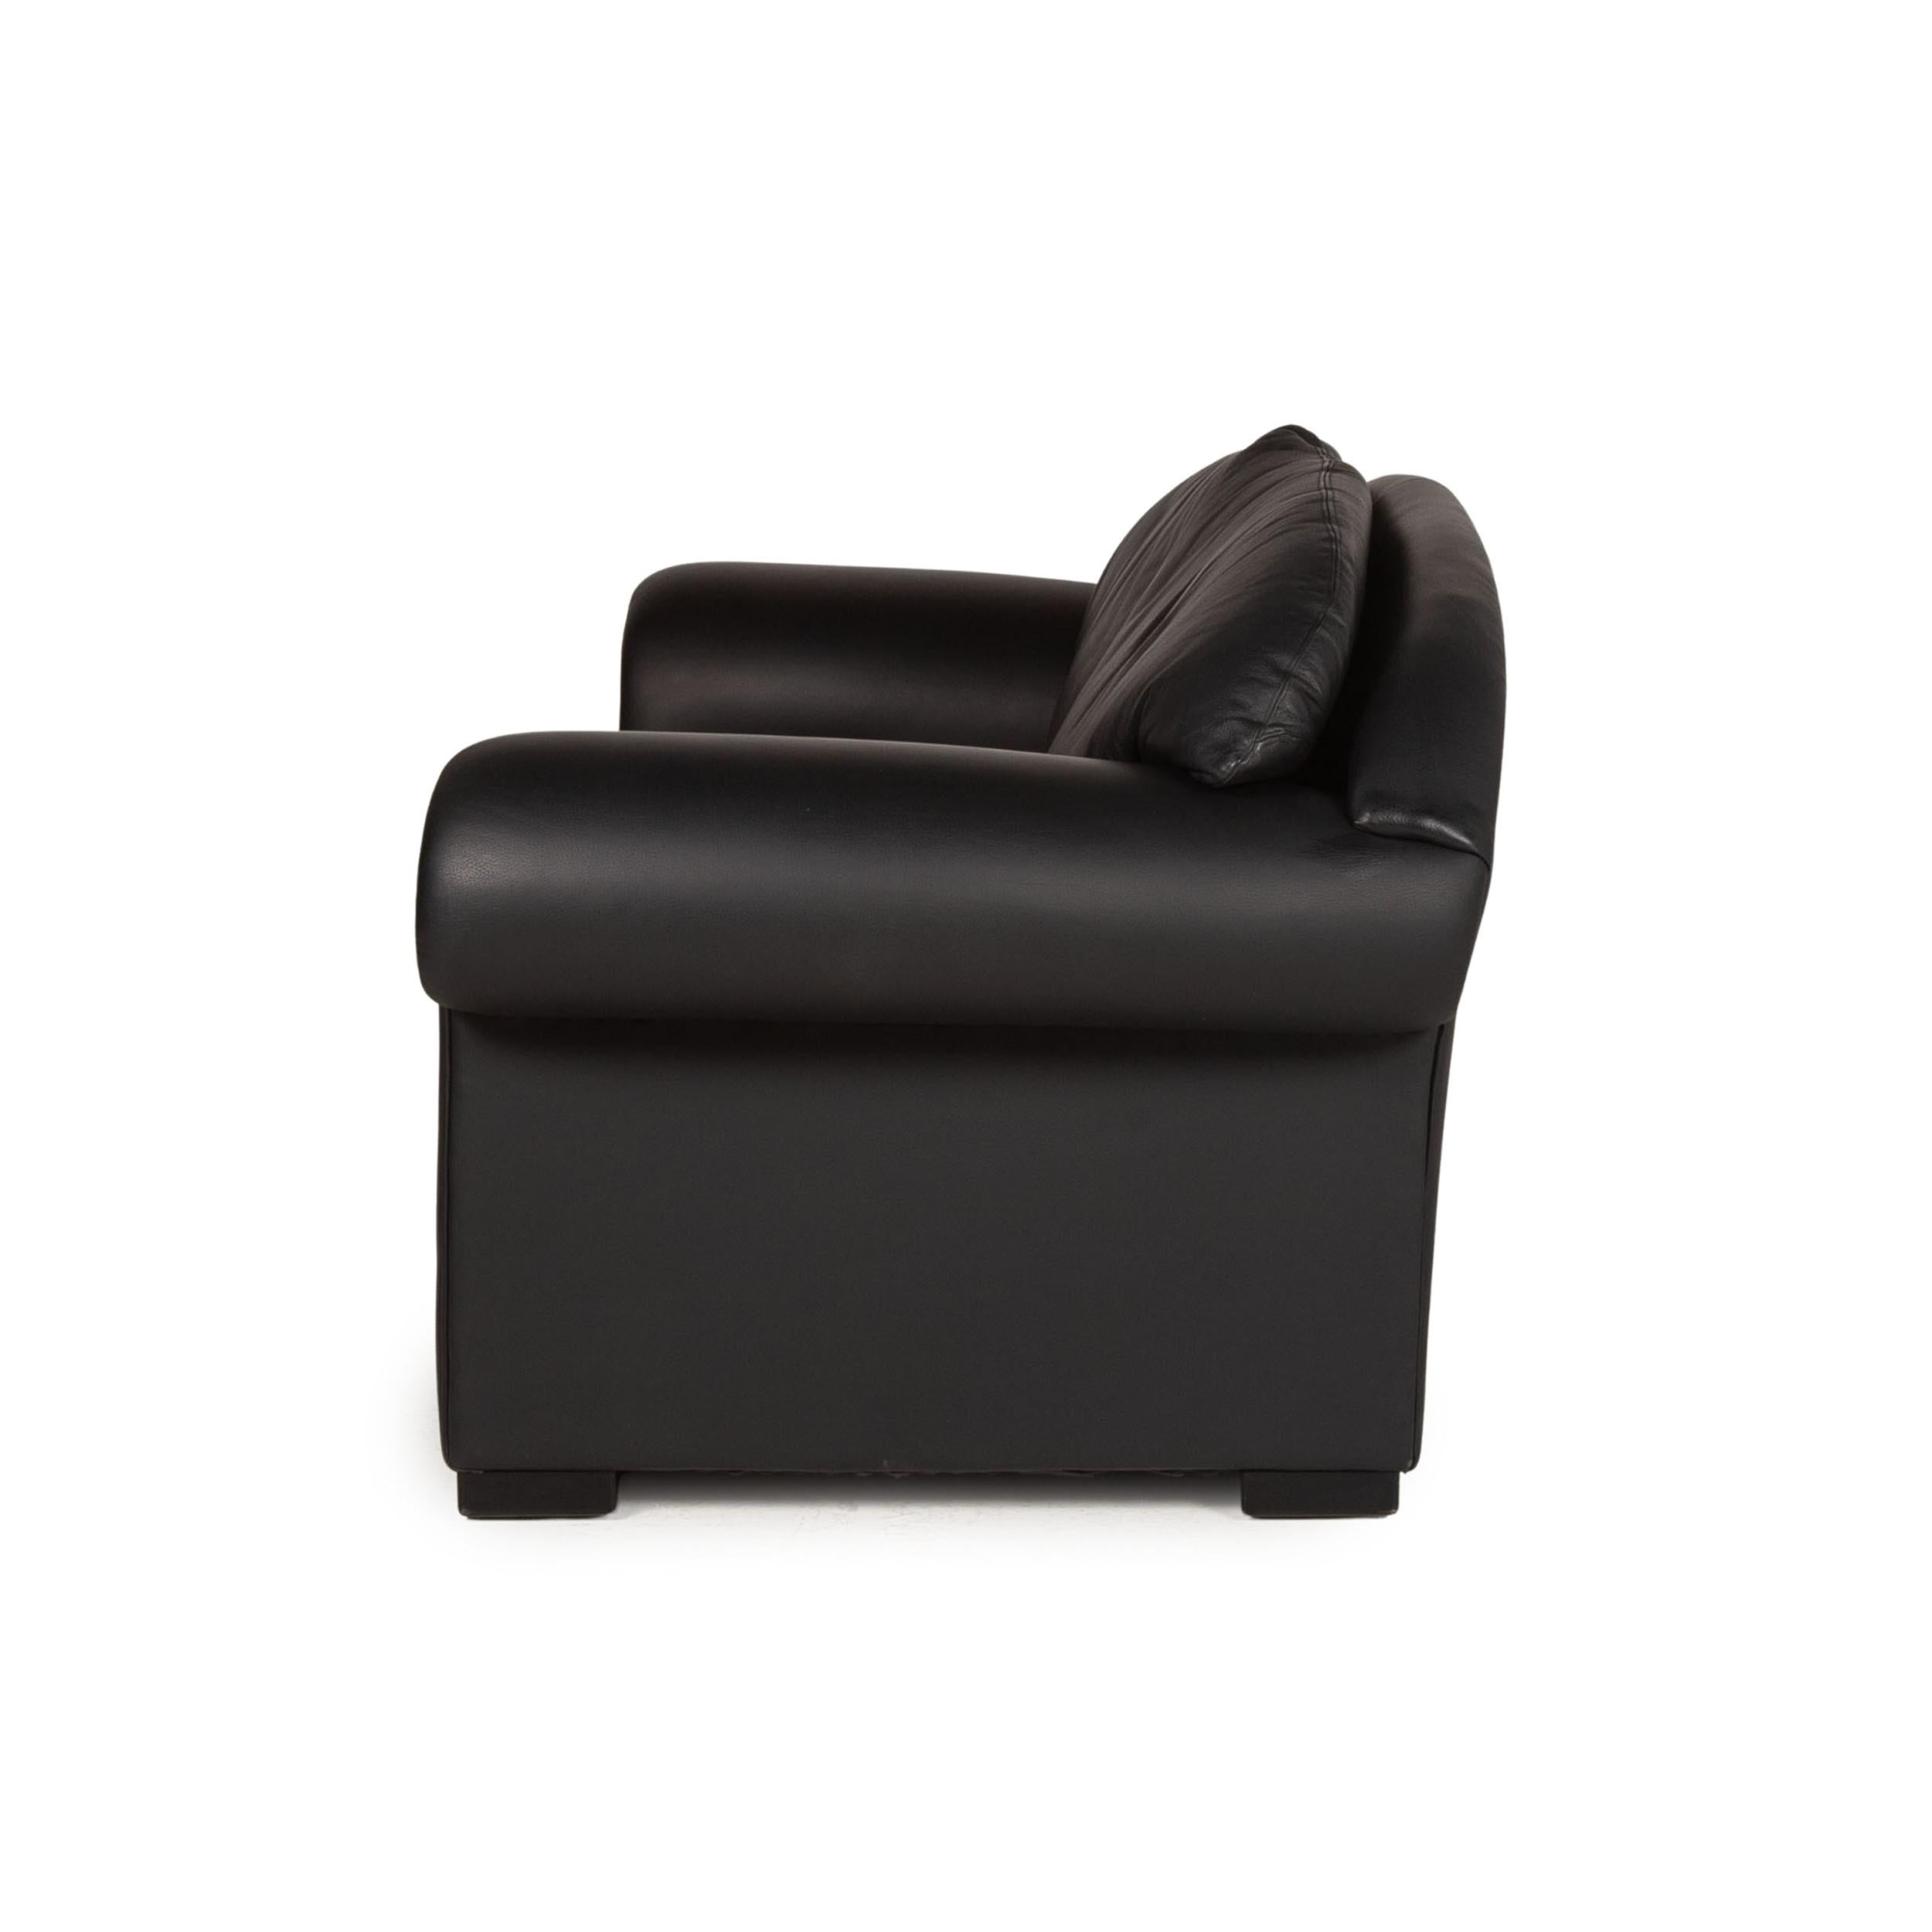 Contemporary Bielefelder Werkstätten Leather Sofa Black Two-Seater Couch